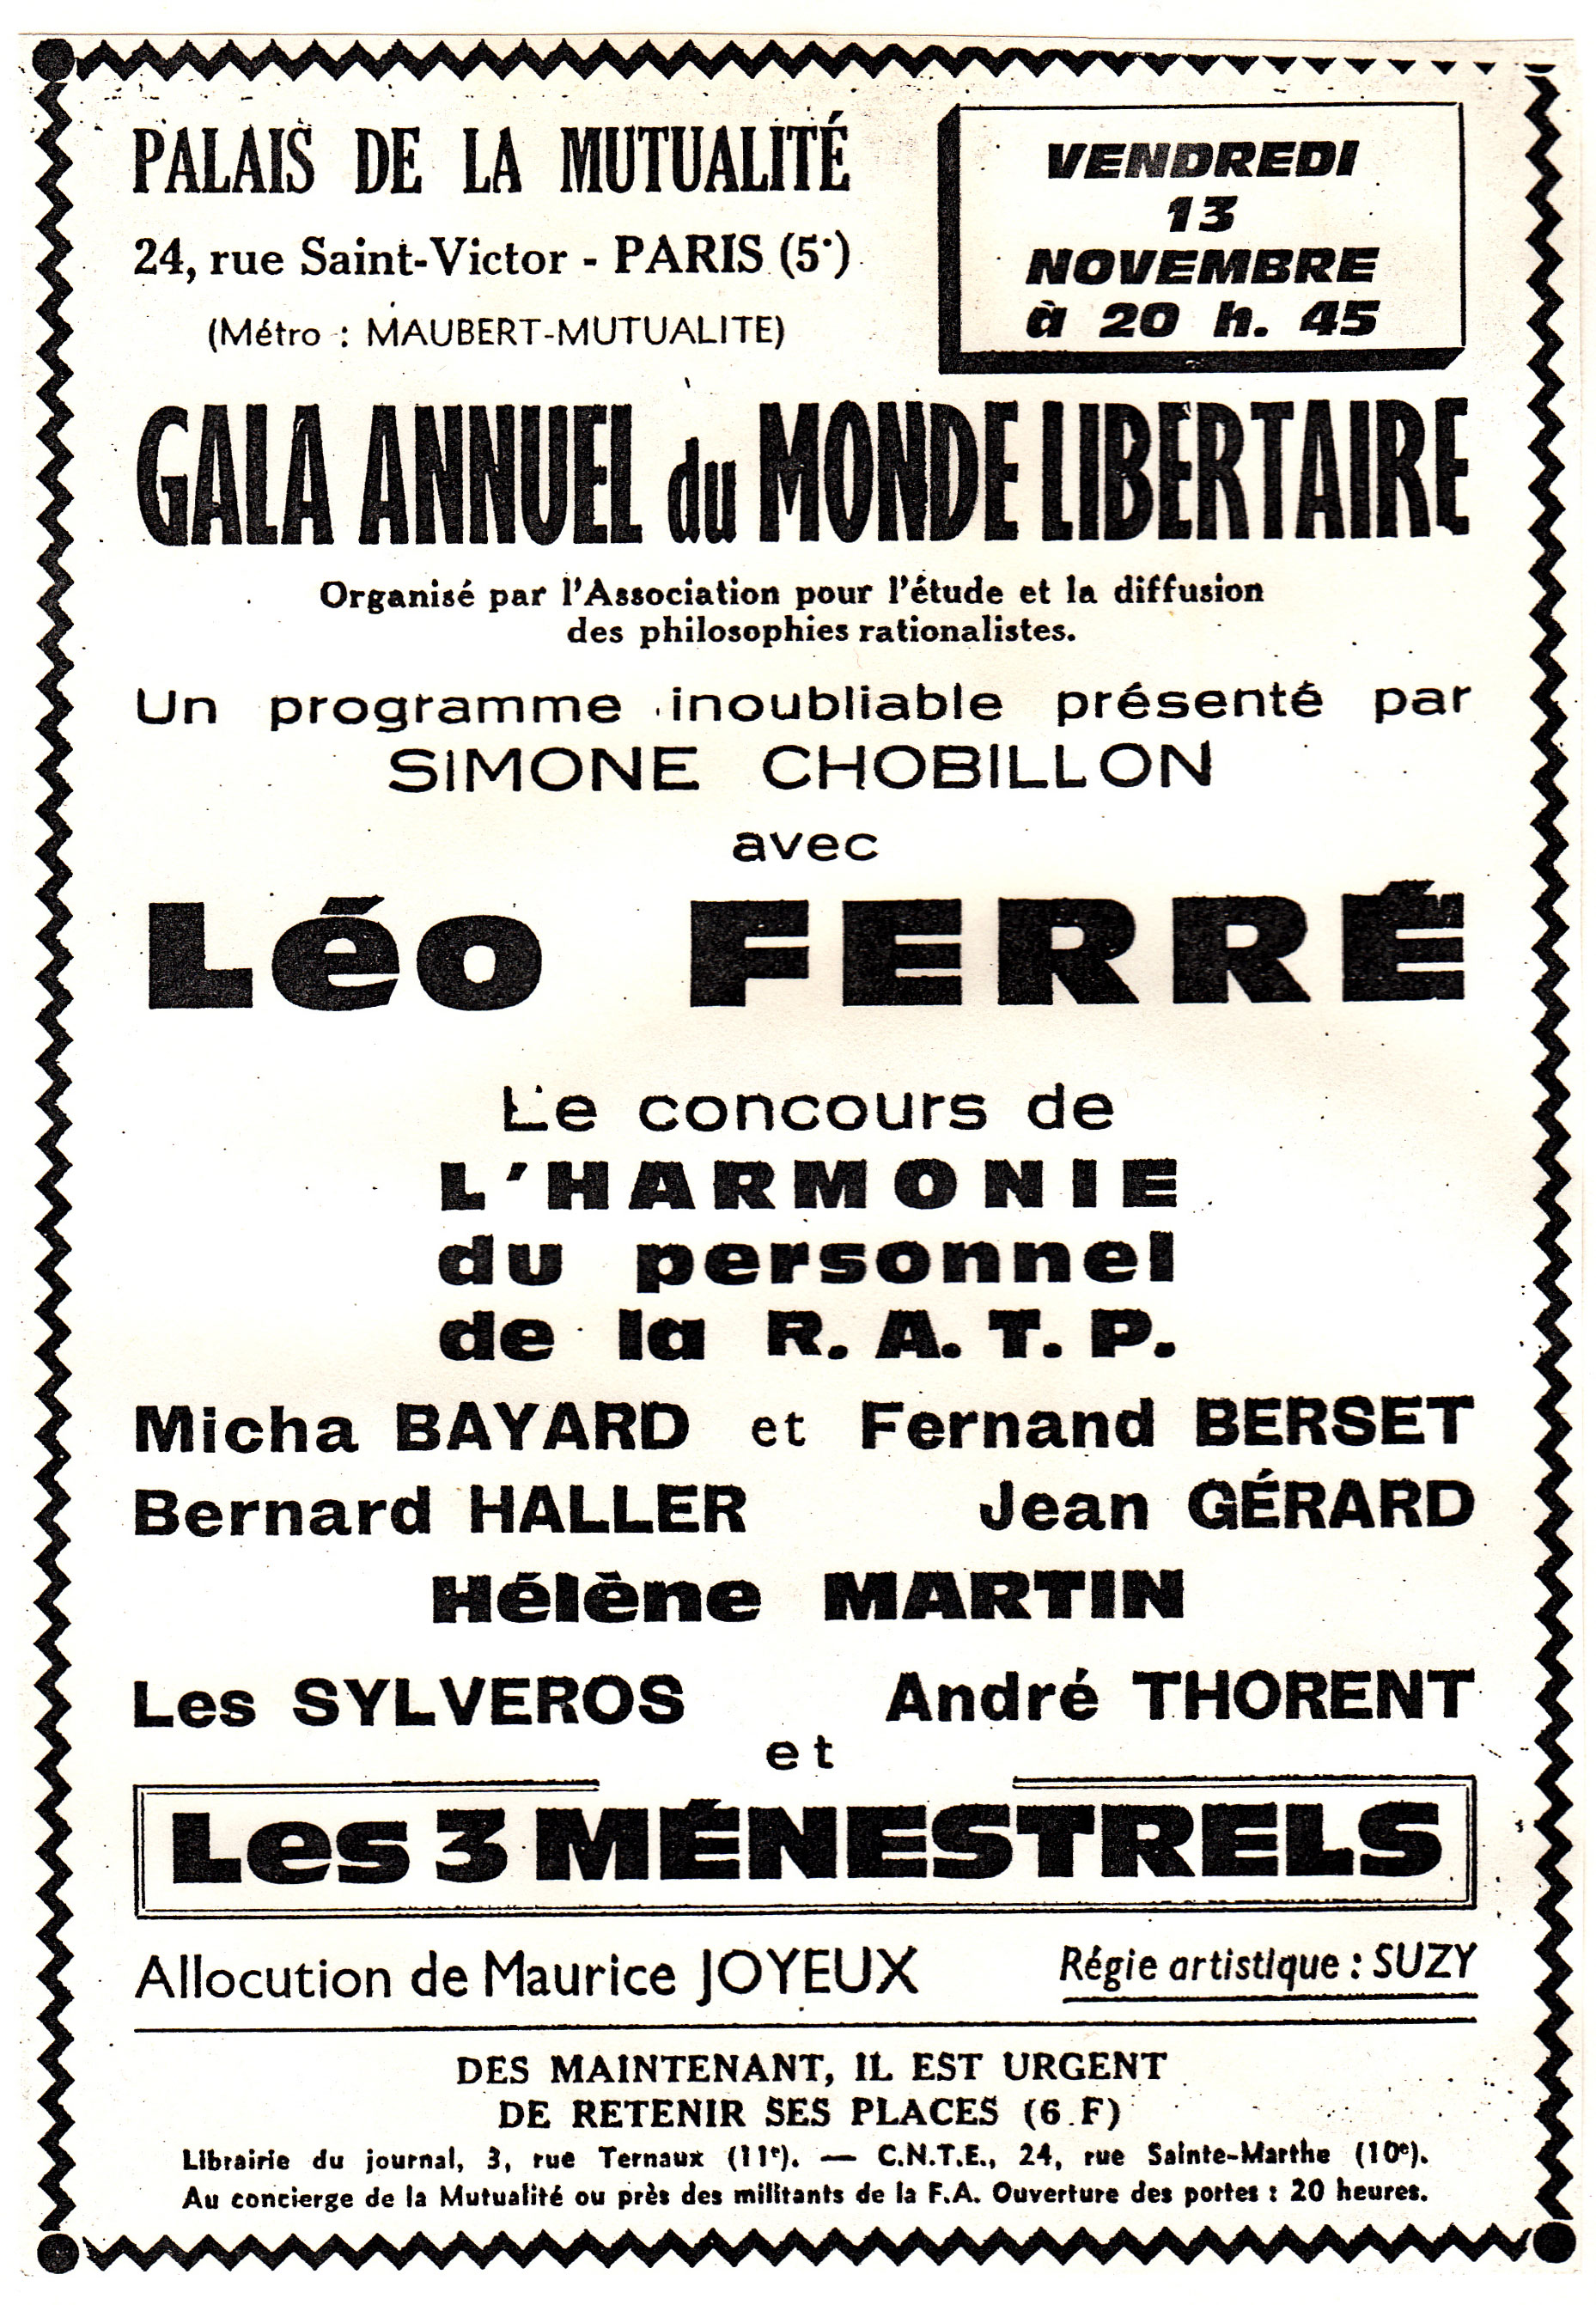 Léo Ferré - Le Monde Libertaire de novembre 1964